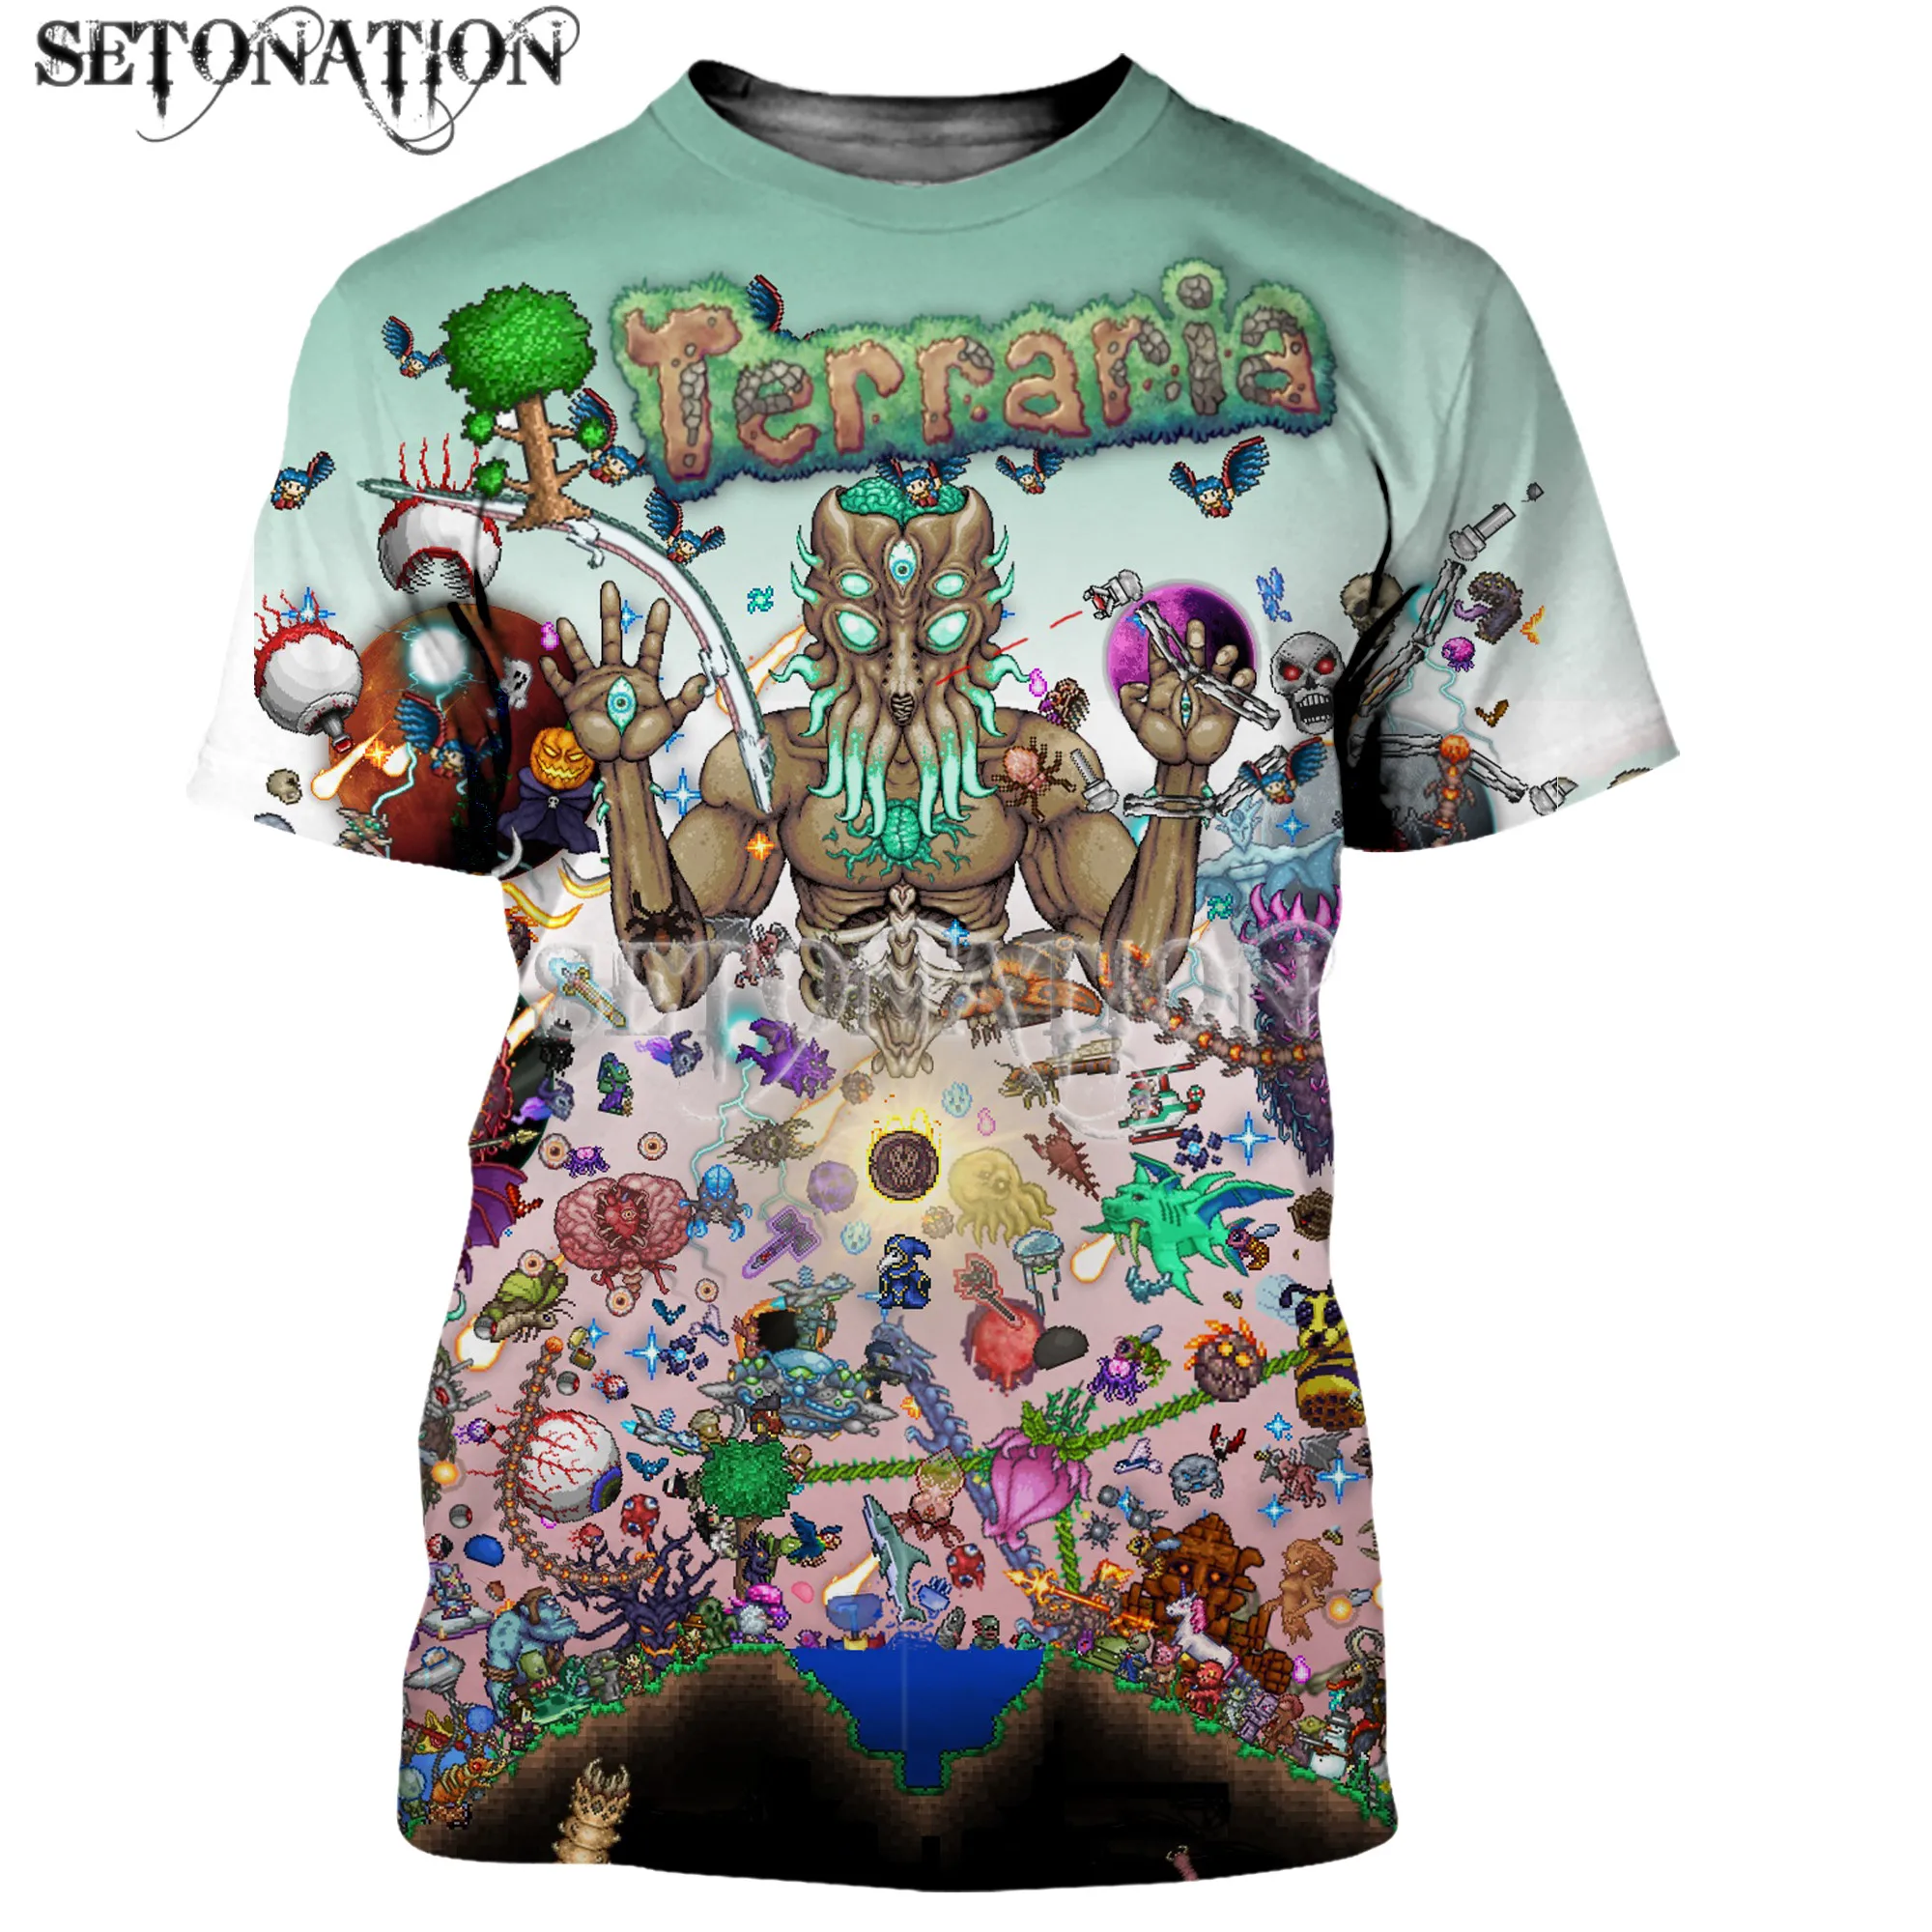 

Terraria Game men/women 3D High Quality printed t-shirts casual style t shirt streetwear tops dropshipping